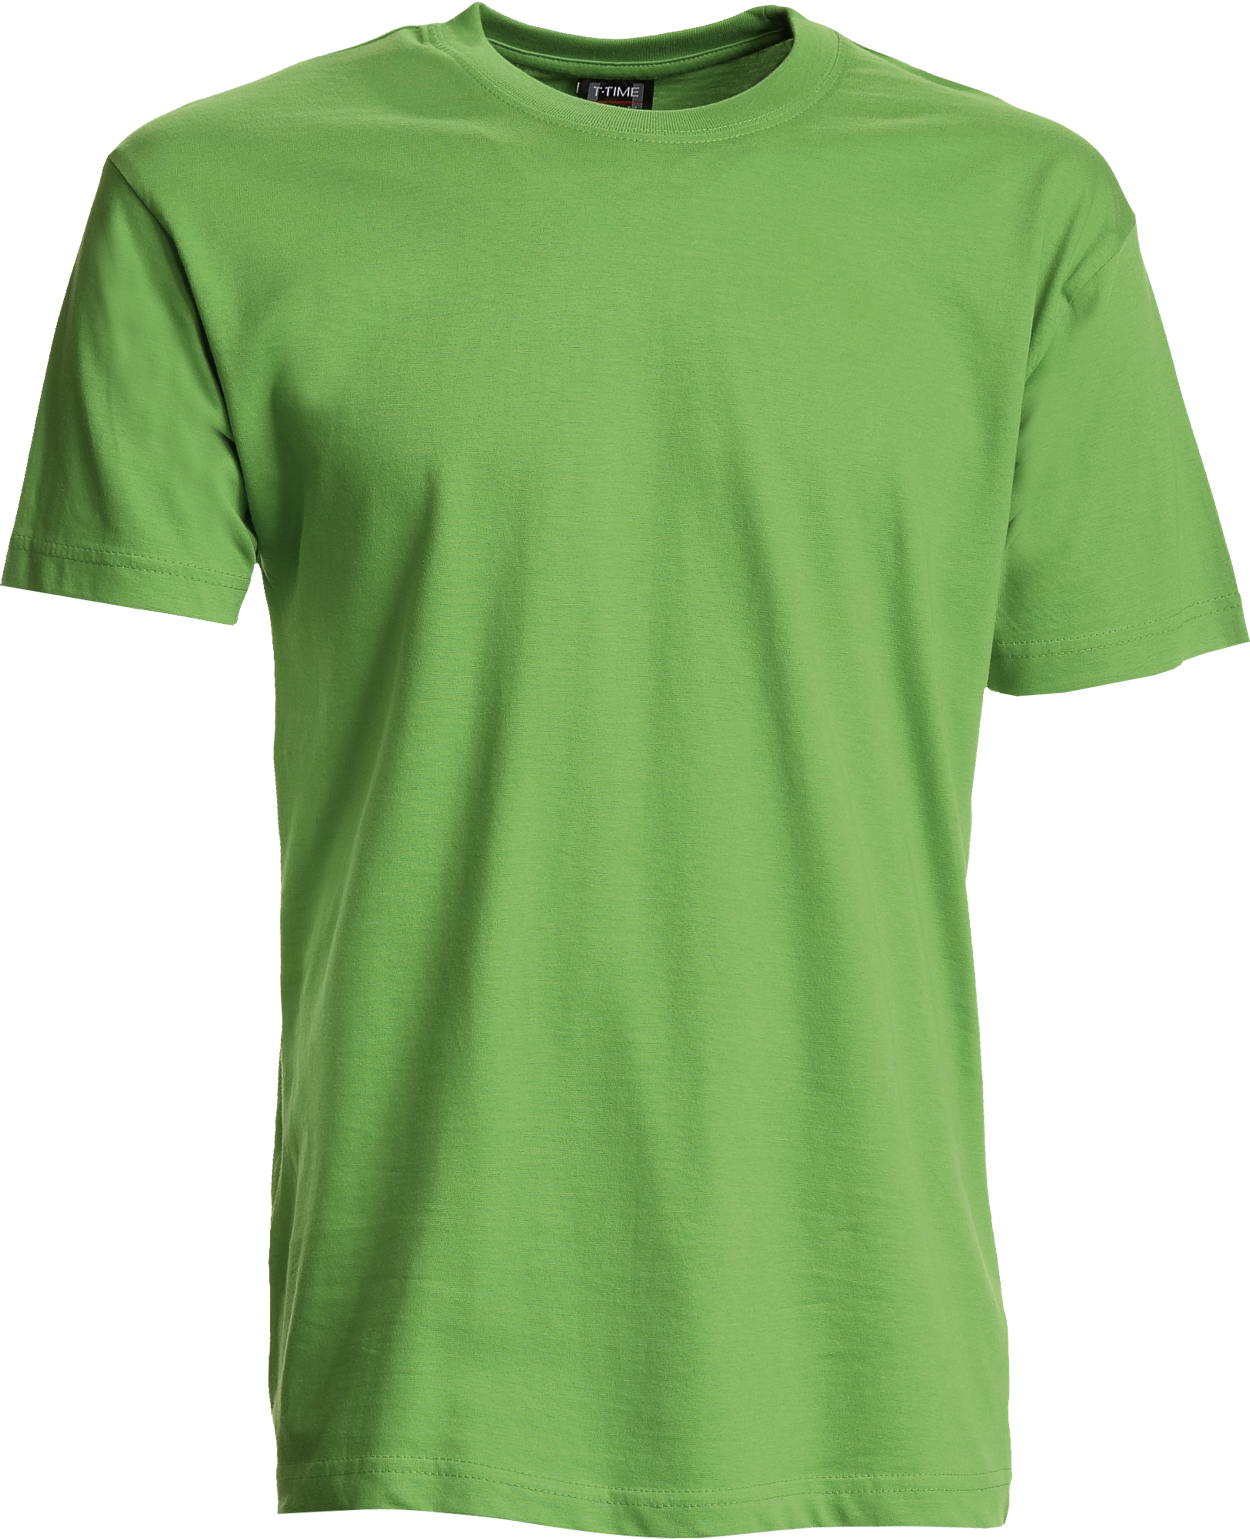 Apfelgrün Herren T-Shirt, Basic (8150101)